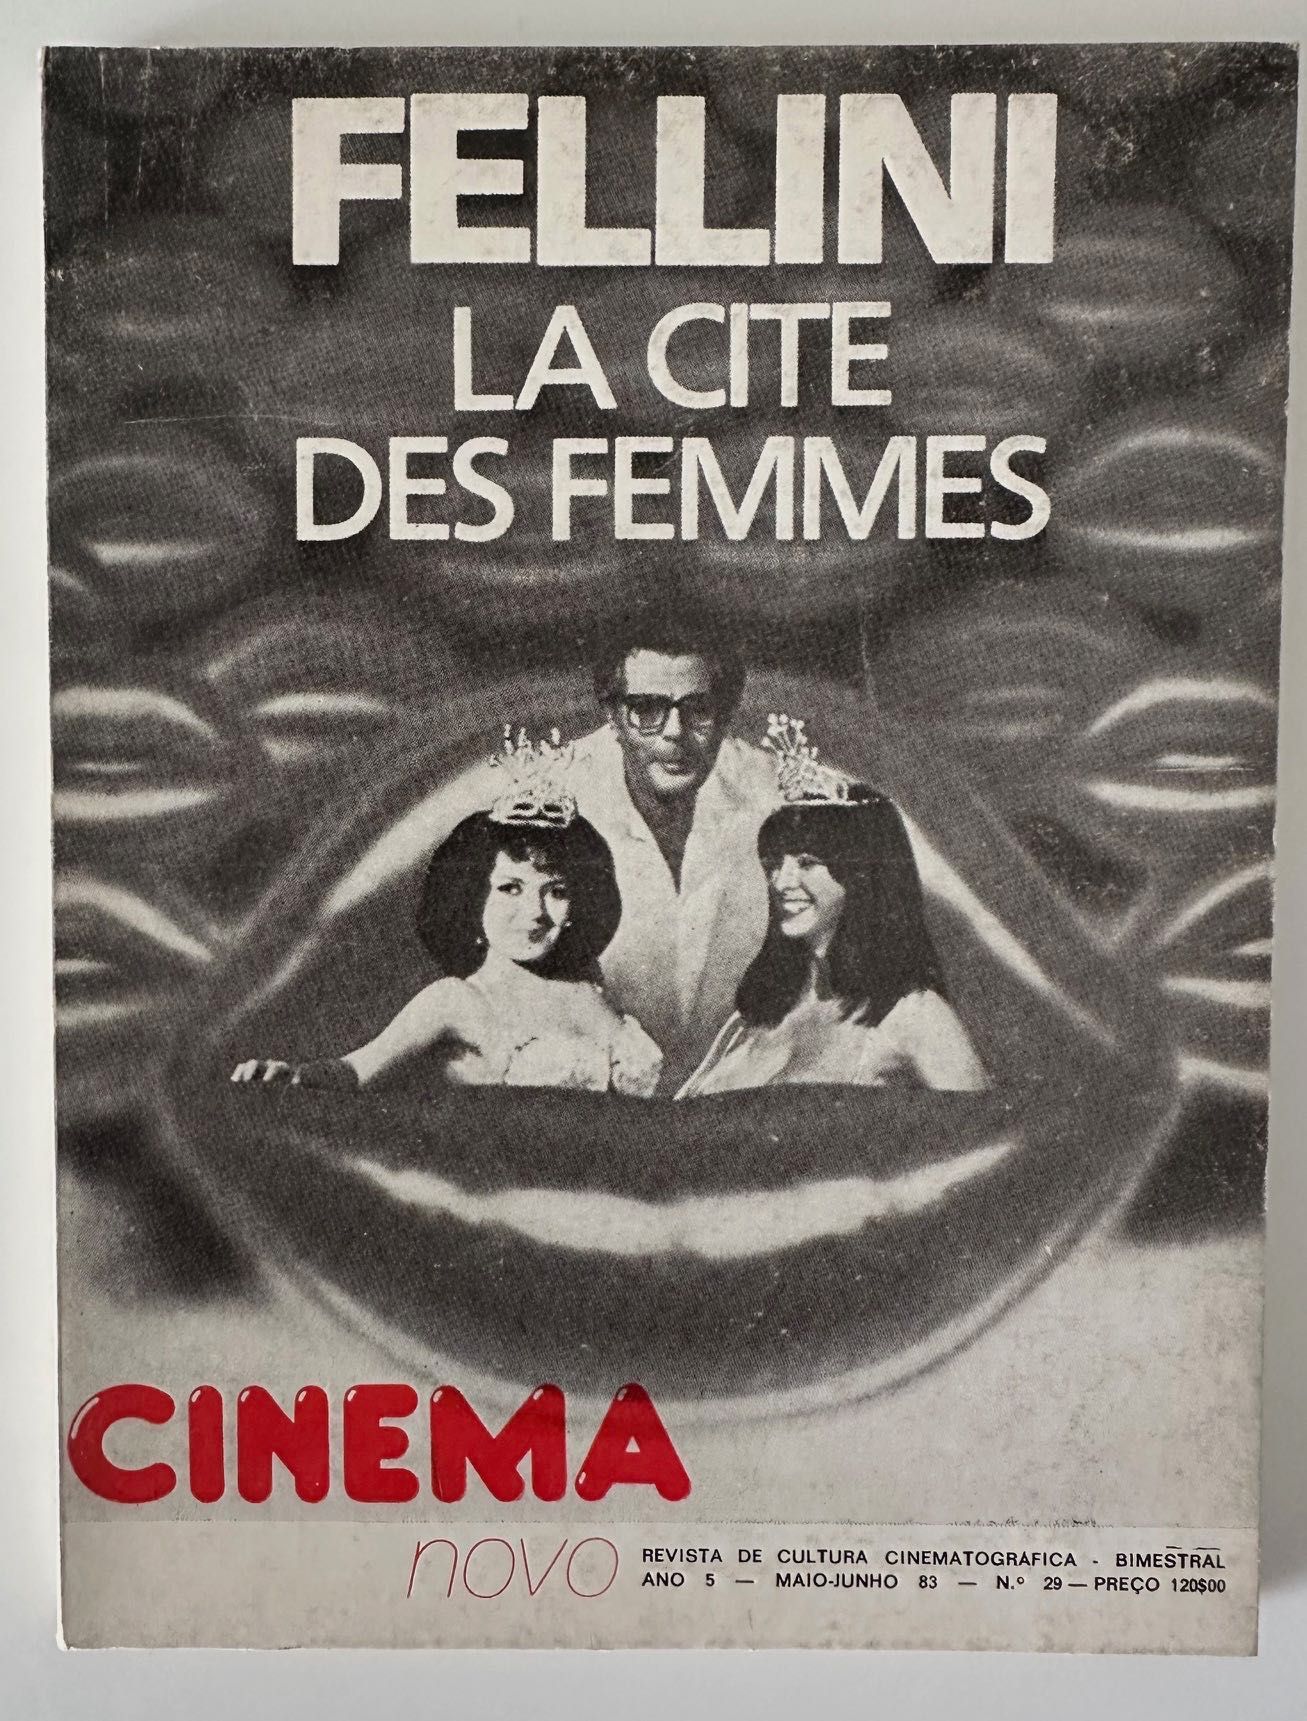 Fellini, La Cité des Femmes - Revista Cinema Novo - Nº 29 - 1983